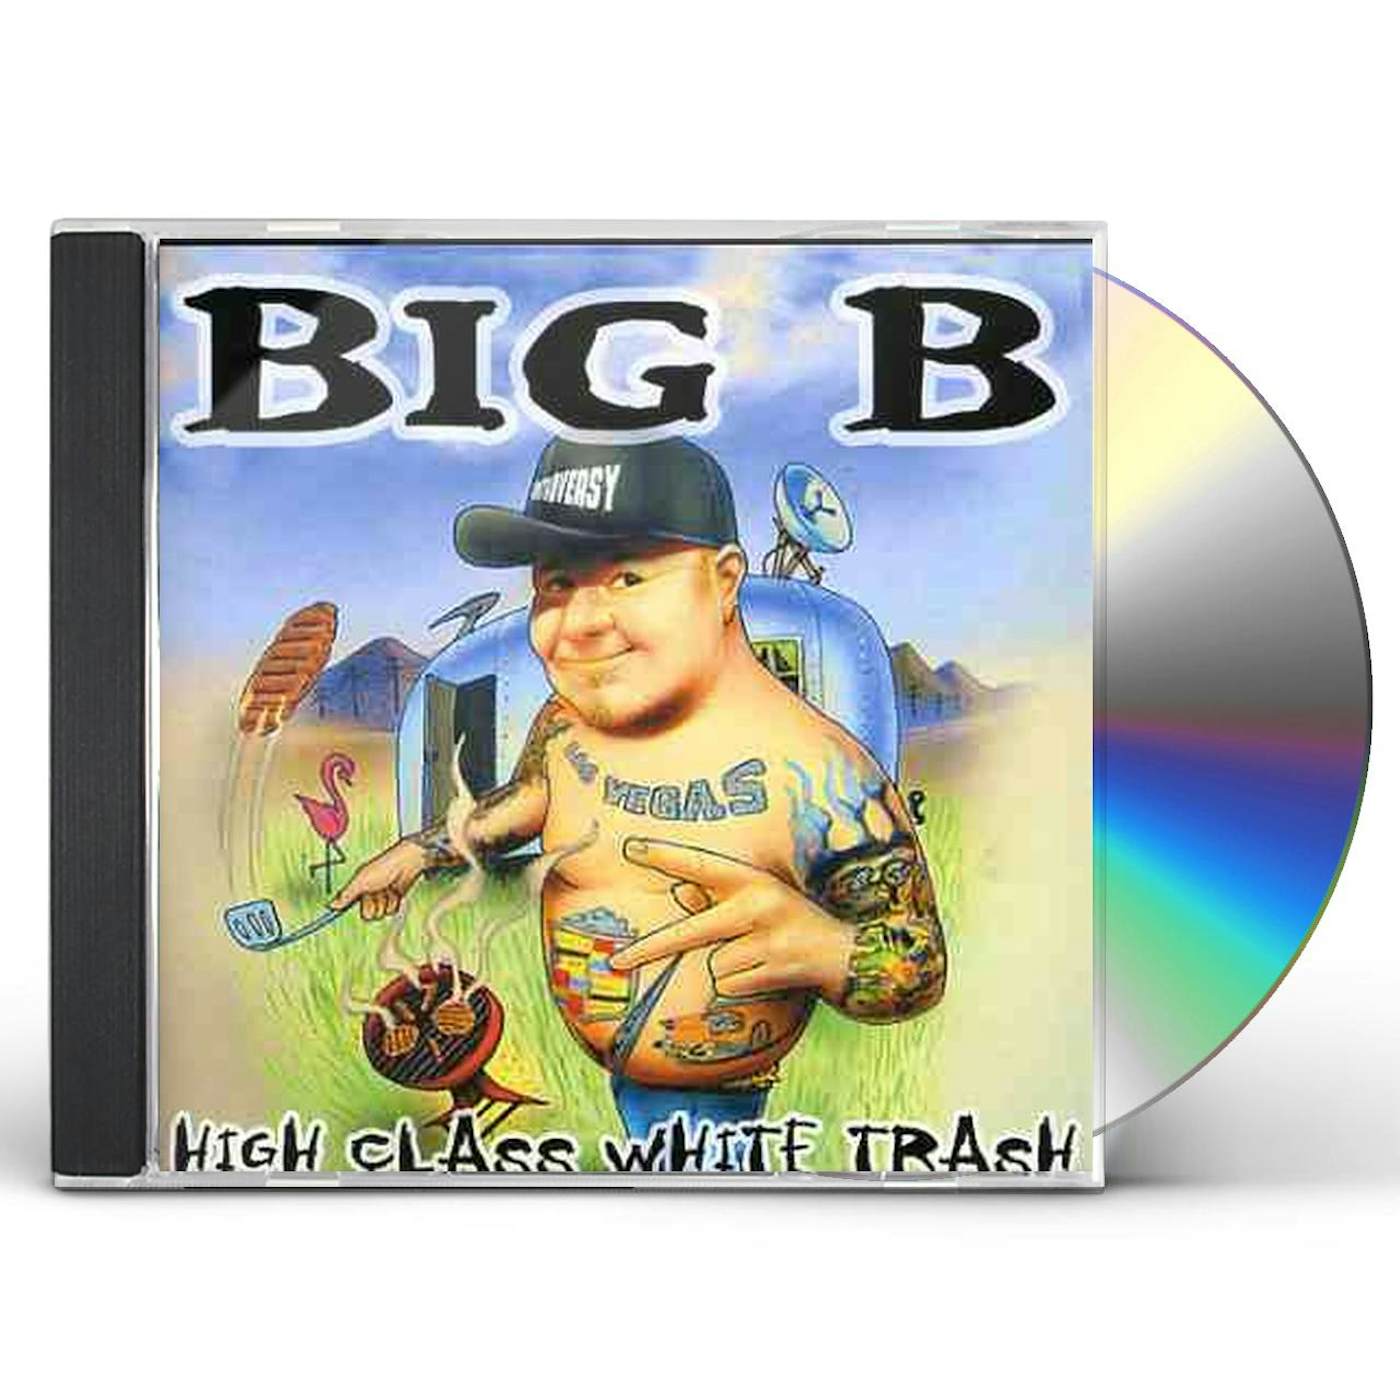 High Class White Trash - Album by Big B